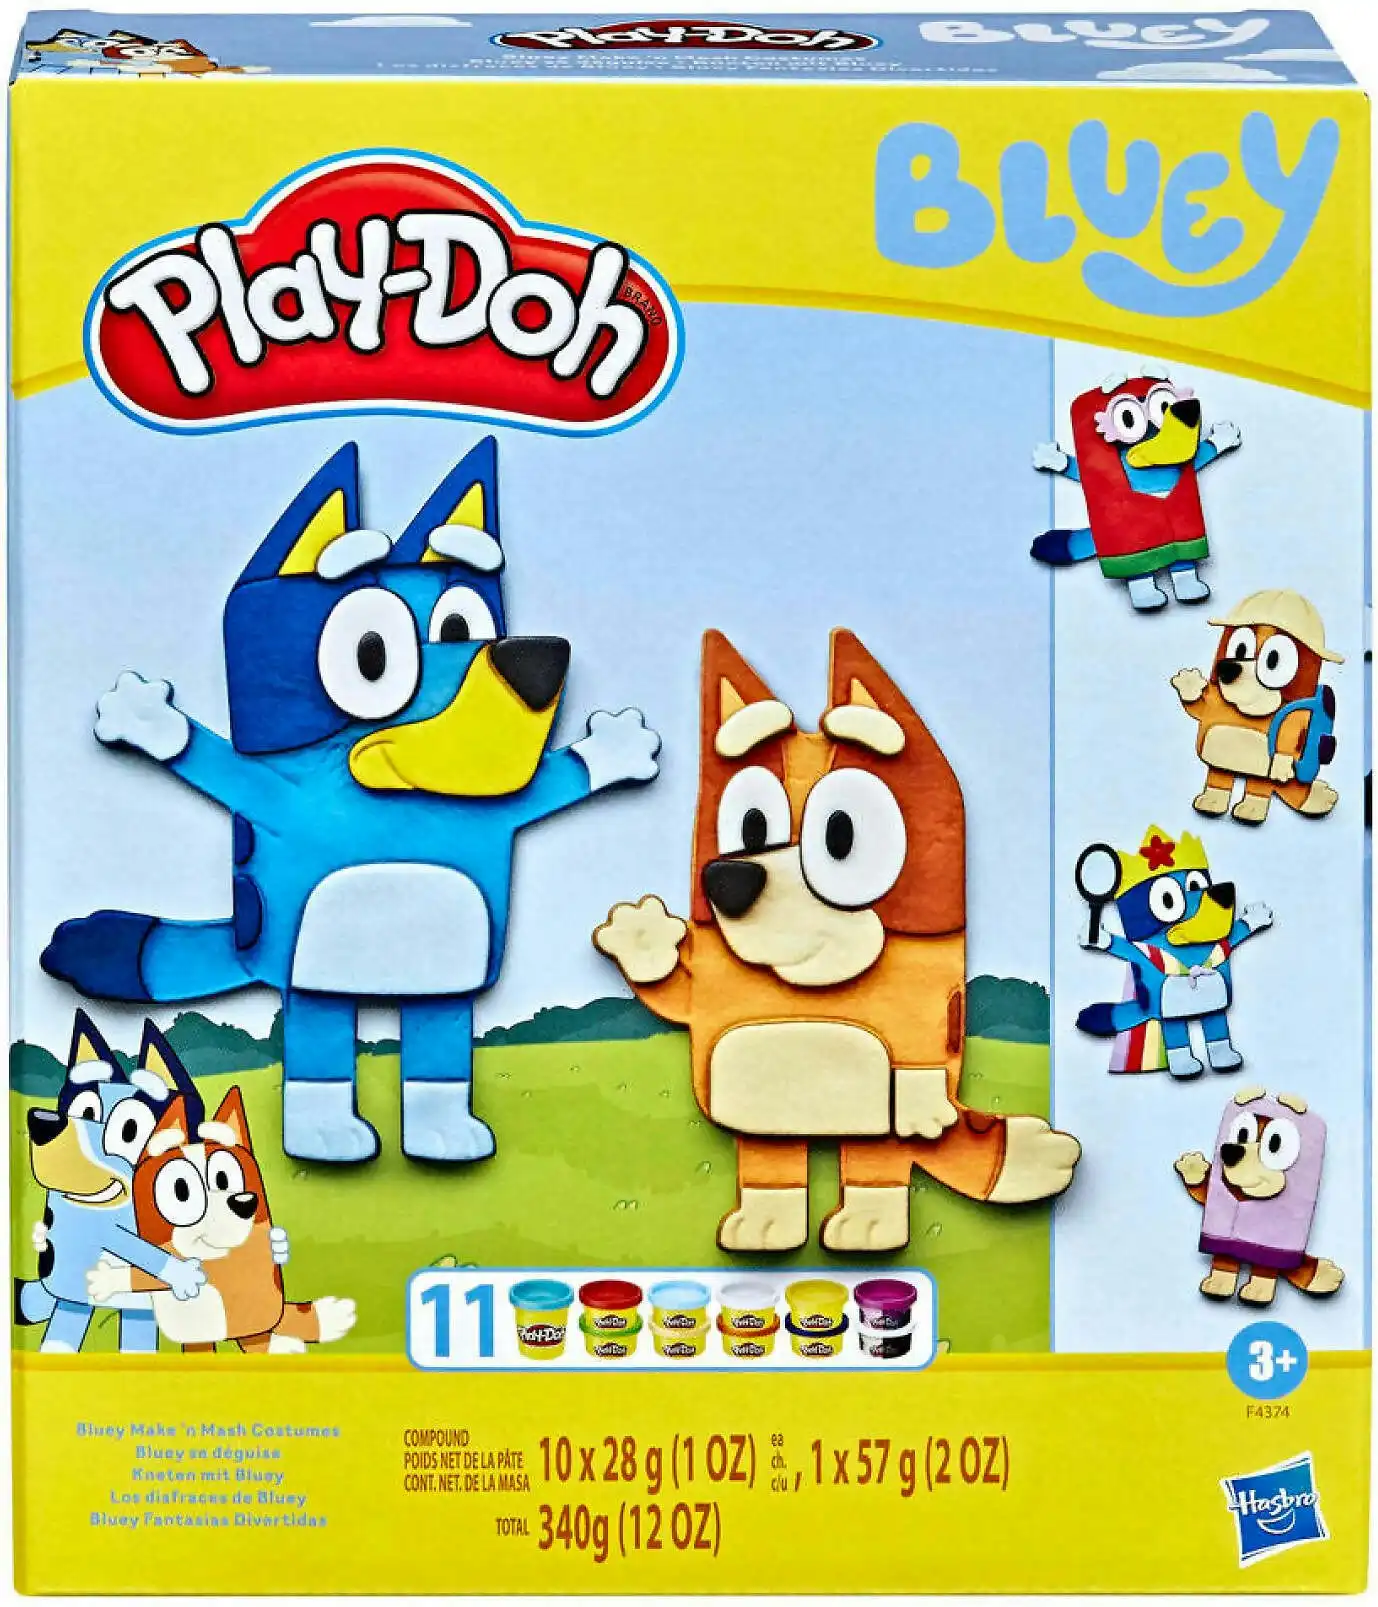 Play-doh - Bluey Make 'n Mash Costumes